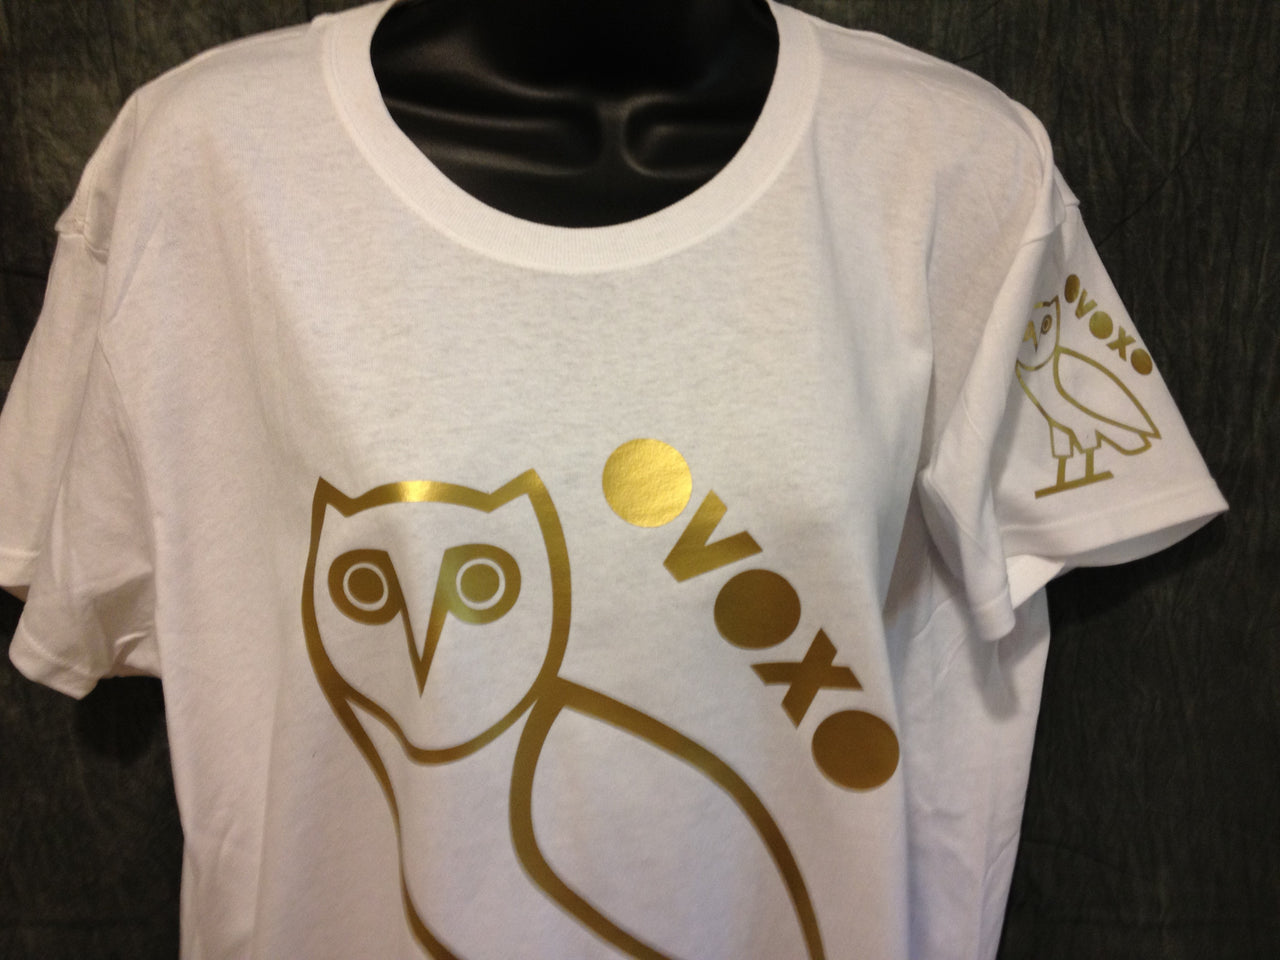 Ovo Drake October's Very Own Ovoxo Owl Gang Girls Tshirt: Gold Print on White Womens Tshirt - TshirtNow.net - 3